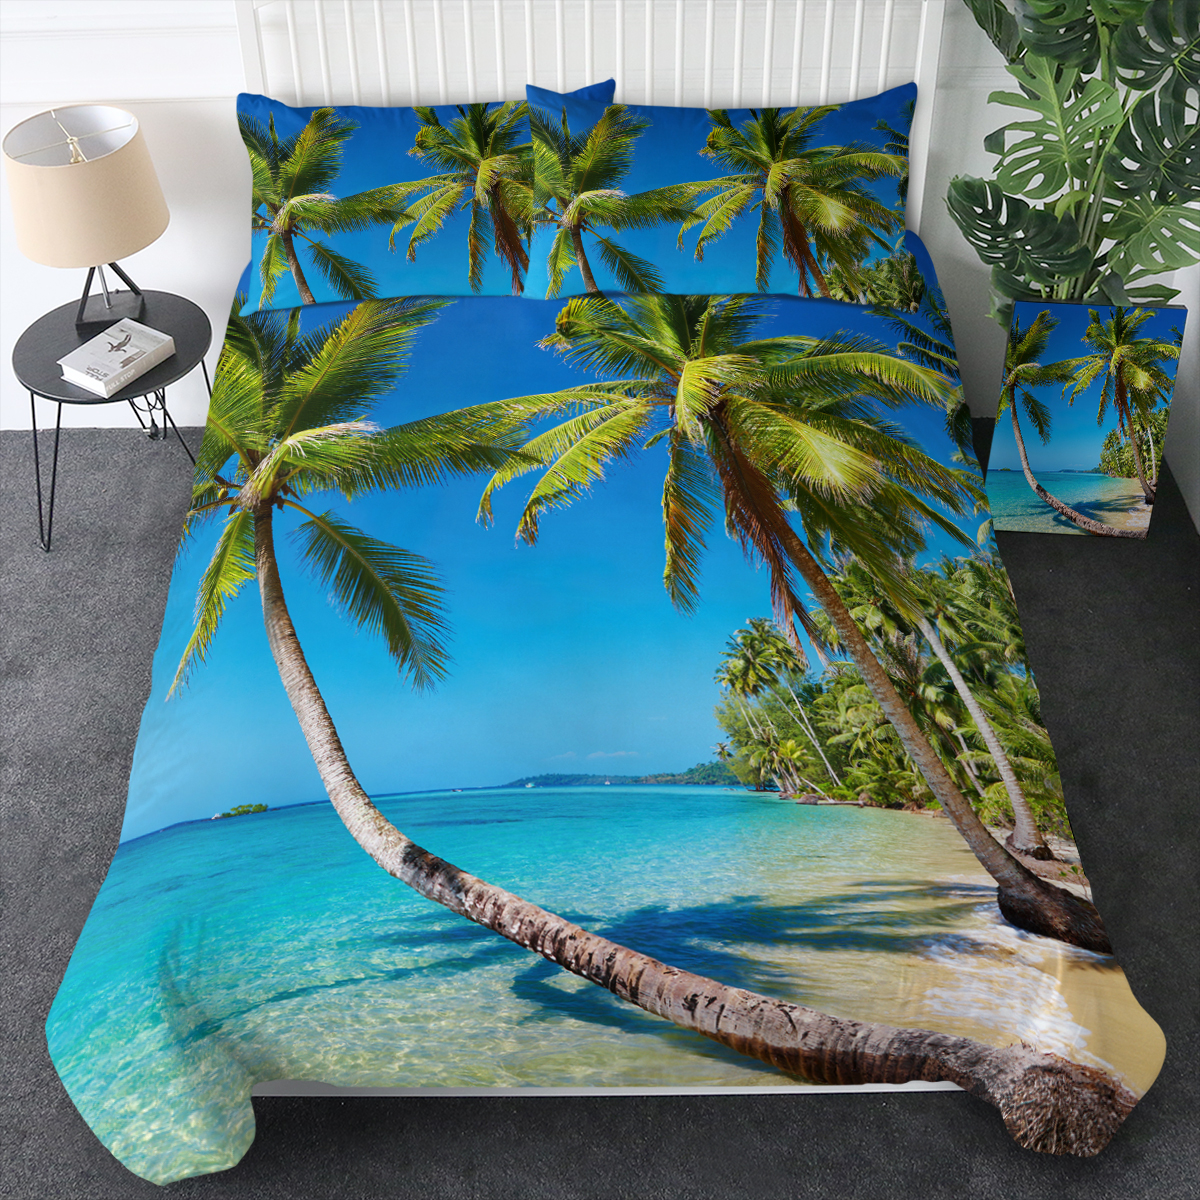 Tropical Escape Bedding Set